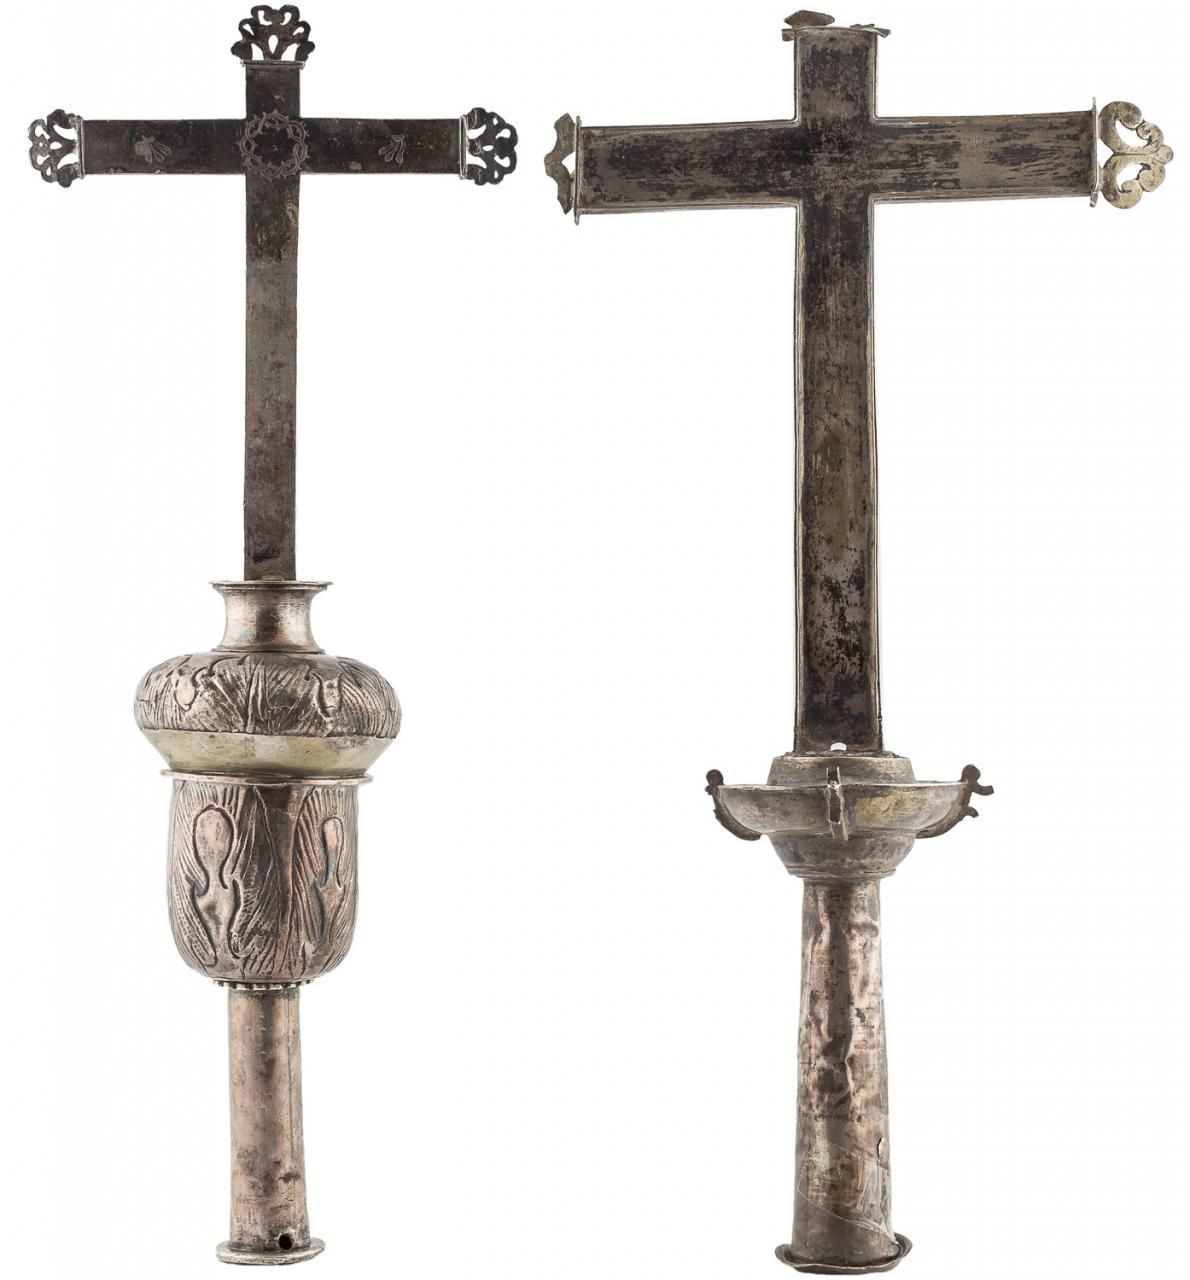 Null 一对银质的拉丁文十字架，平臂和镂空装饰的游行十字架。钟形结，有植物装饰。西班牙。S. XVII.

38 x 20 cm
重量：830克。其中一个有小&hellip;